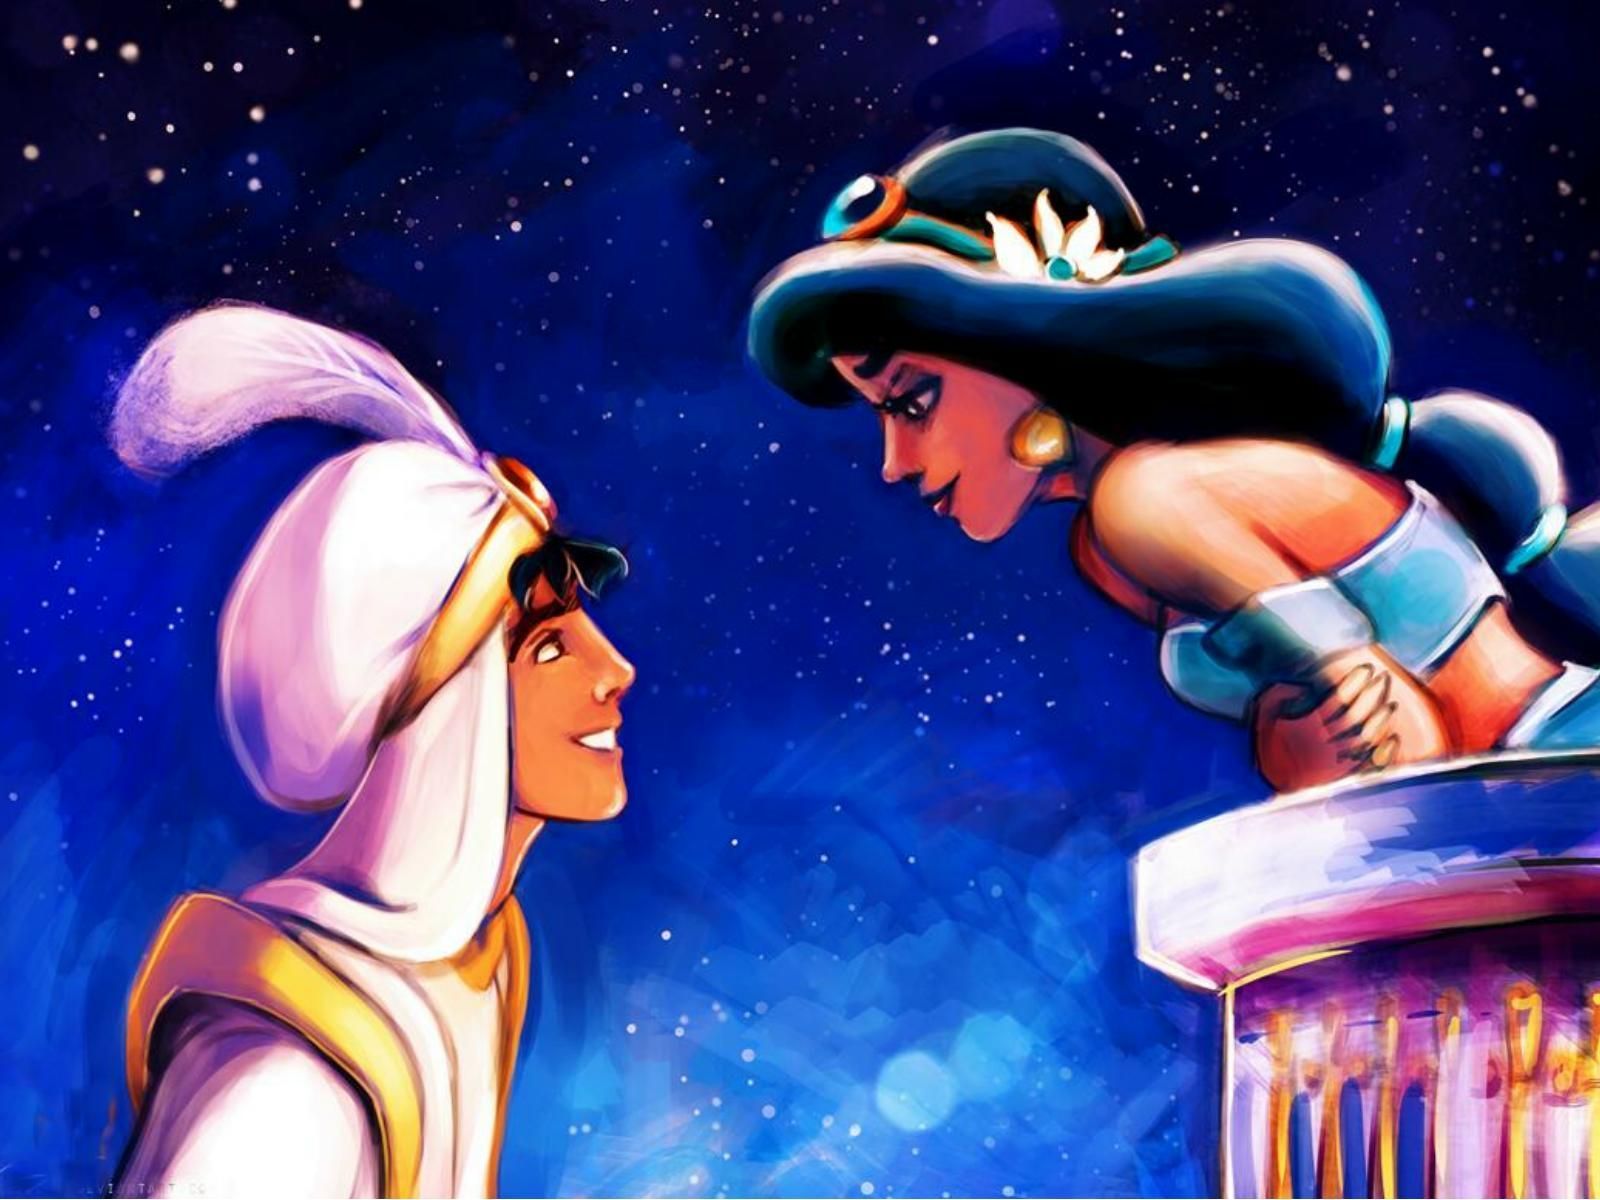 Aladdin Cartoon Wallpaper For Desktop Free to Download. Disney